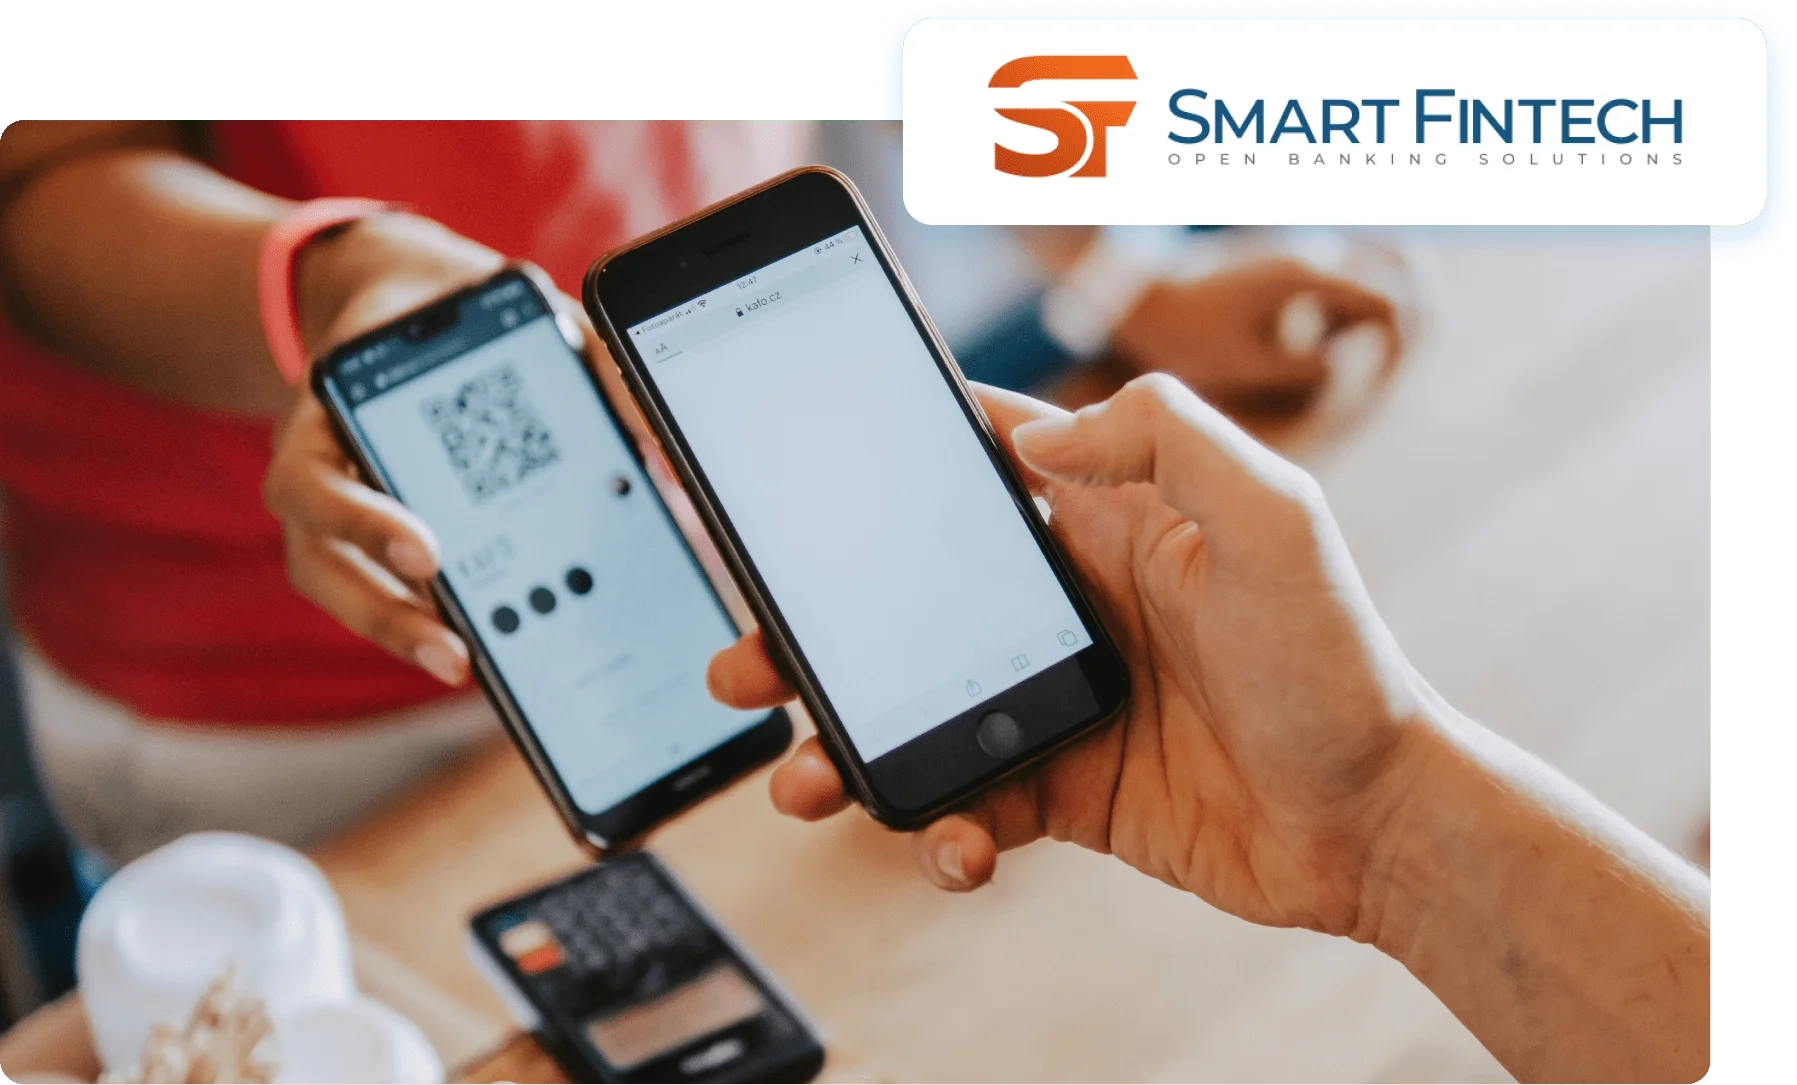 Mobile Payment Smart Fintech